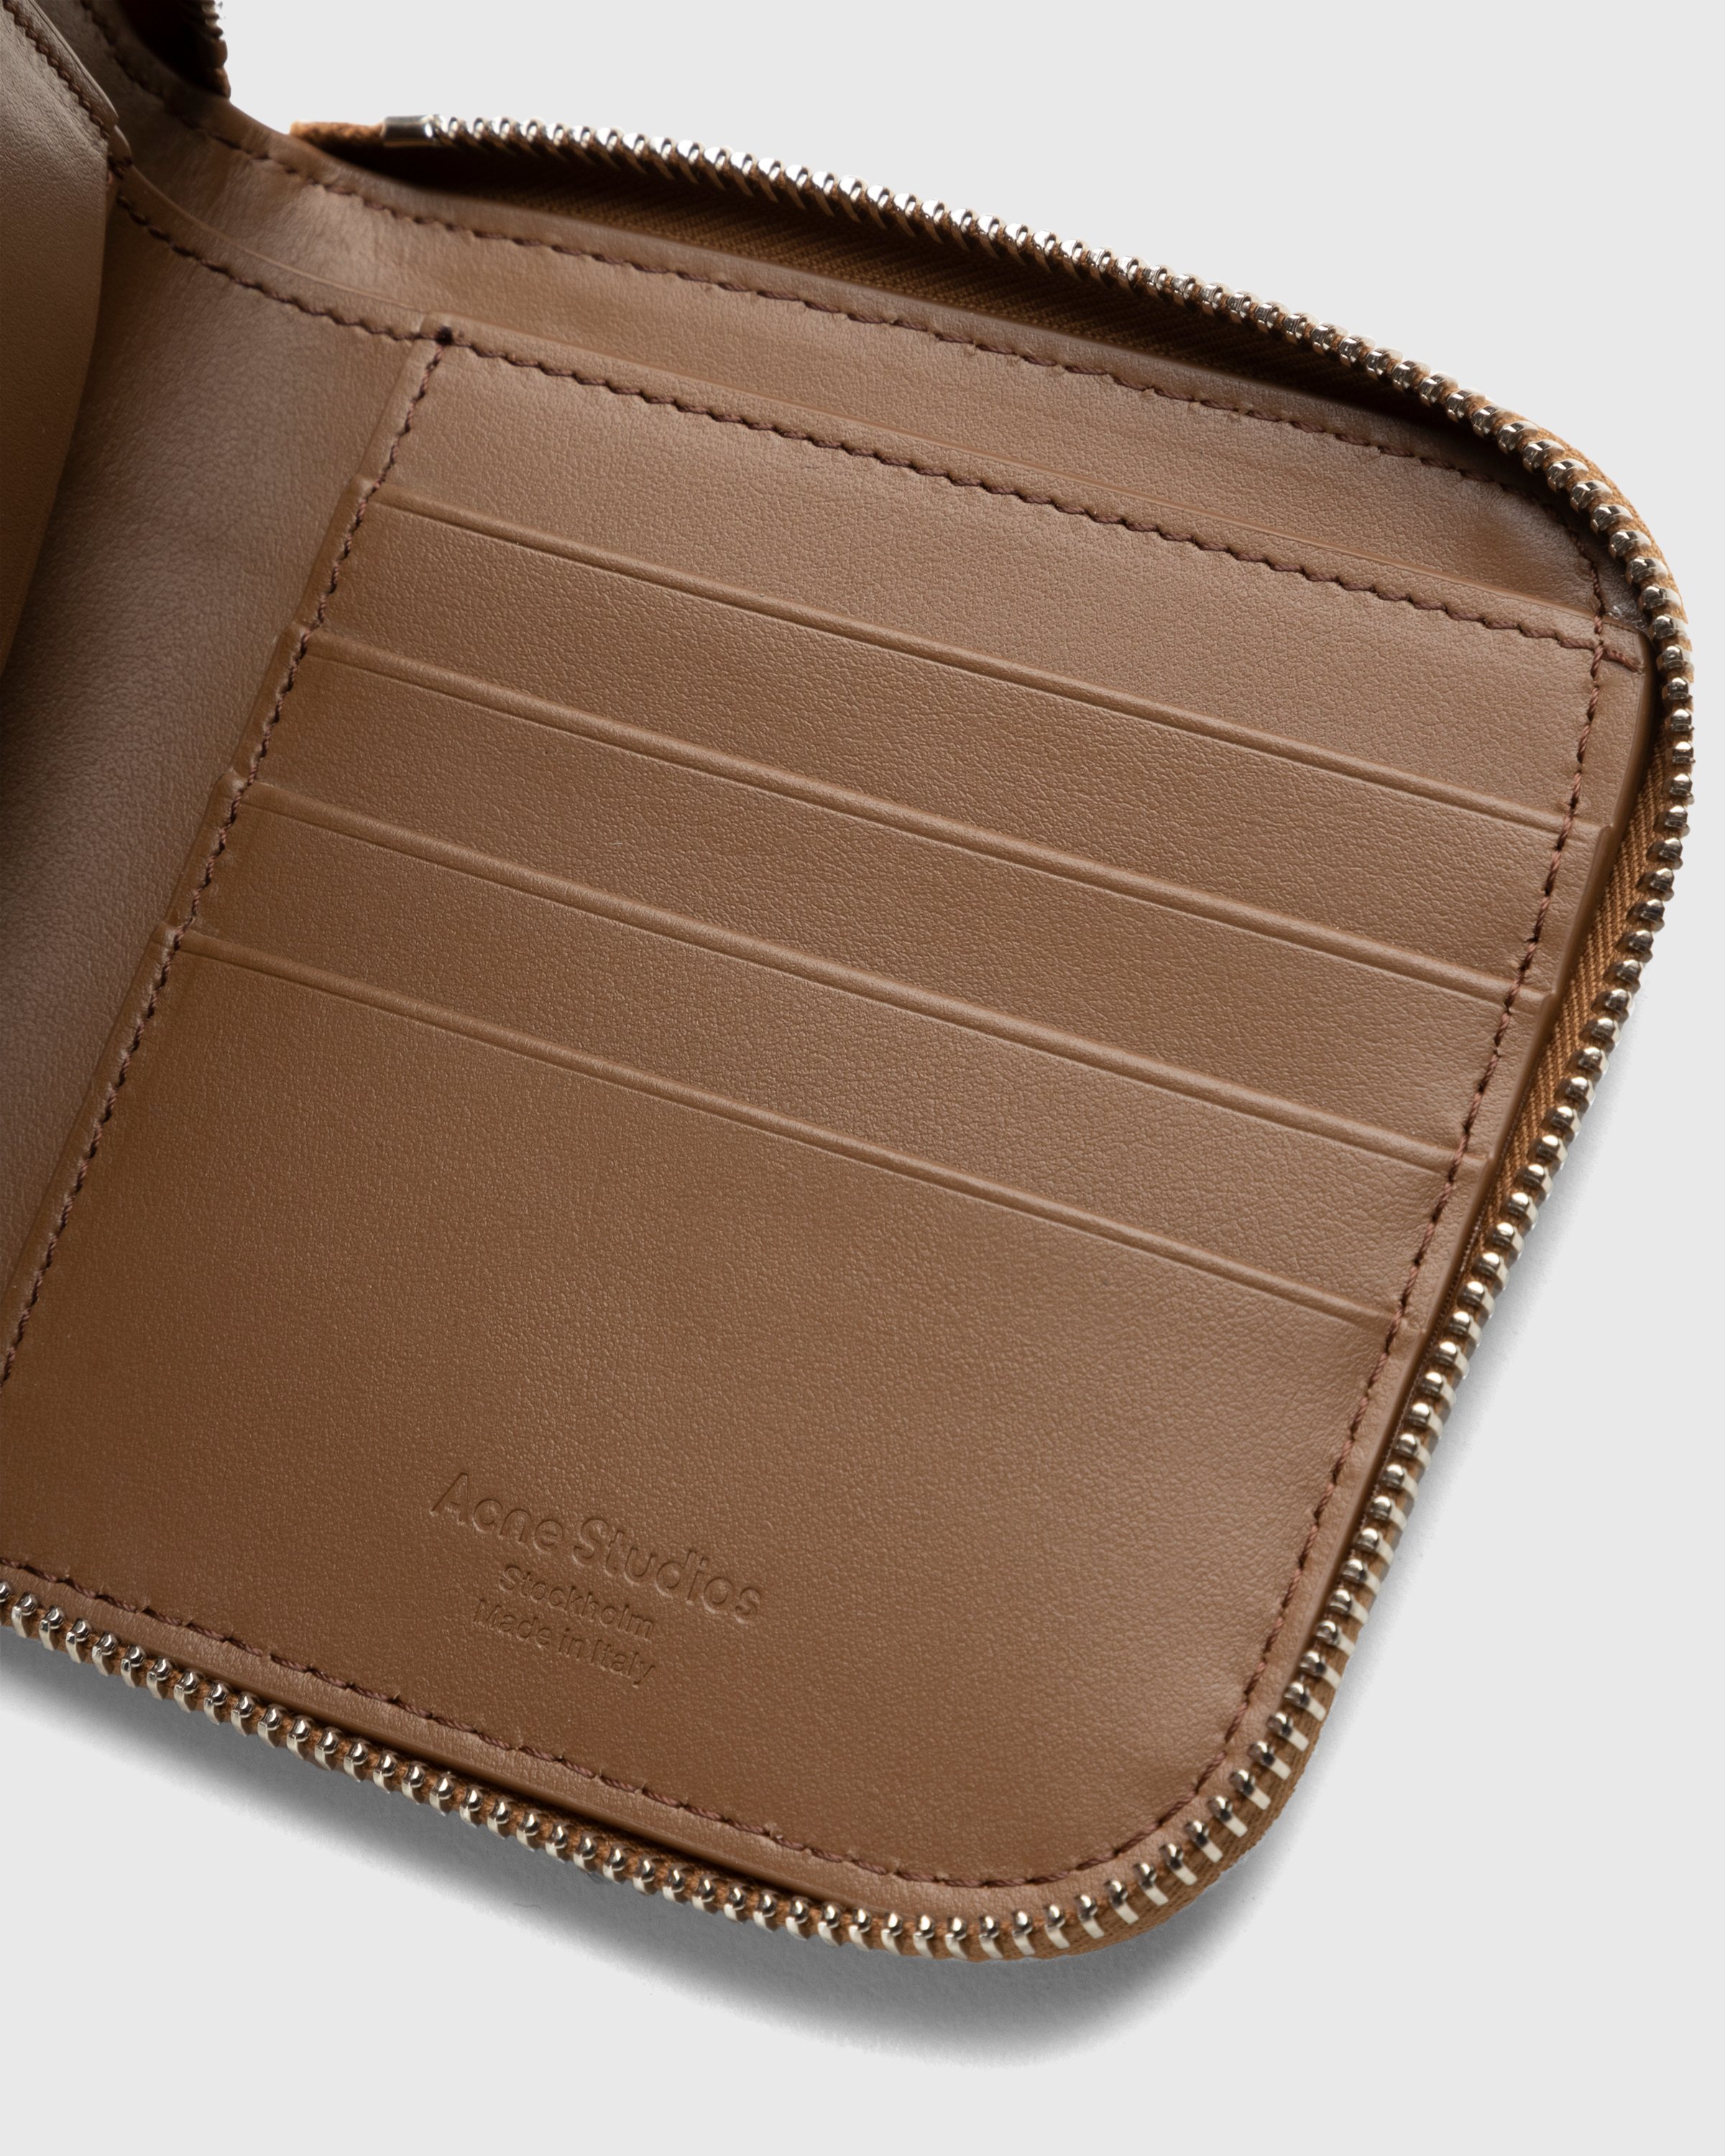 Acne Studios - Leather Zip Wallet Brown - Accessories - Brown - Image 5